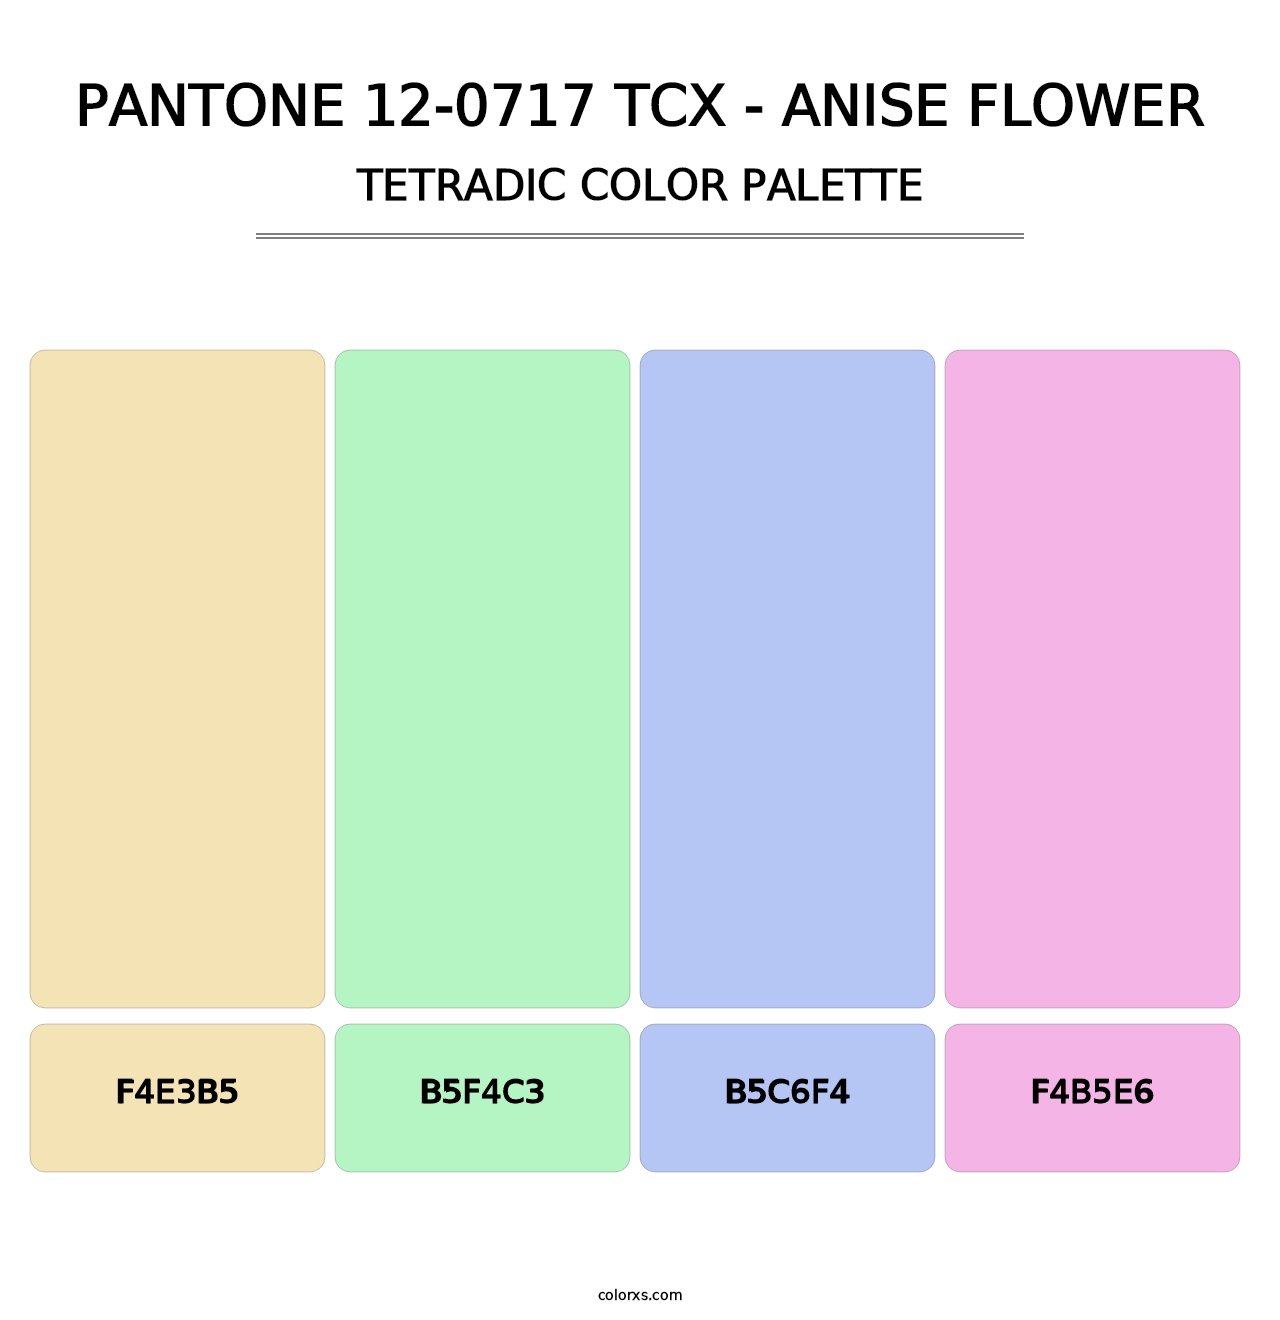 PANTONE 12-0717 TCX - Anise Flower - Tetradic Color Palette